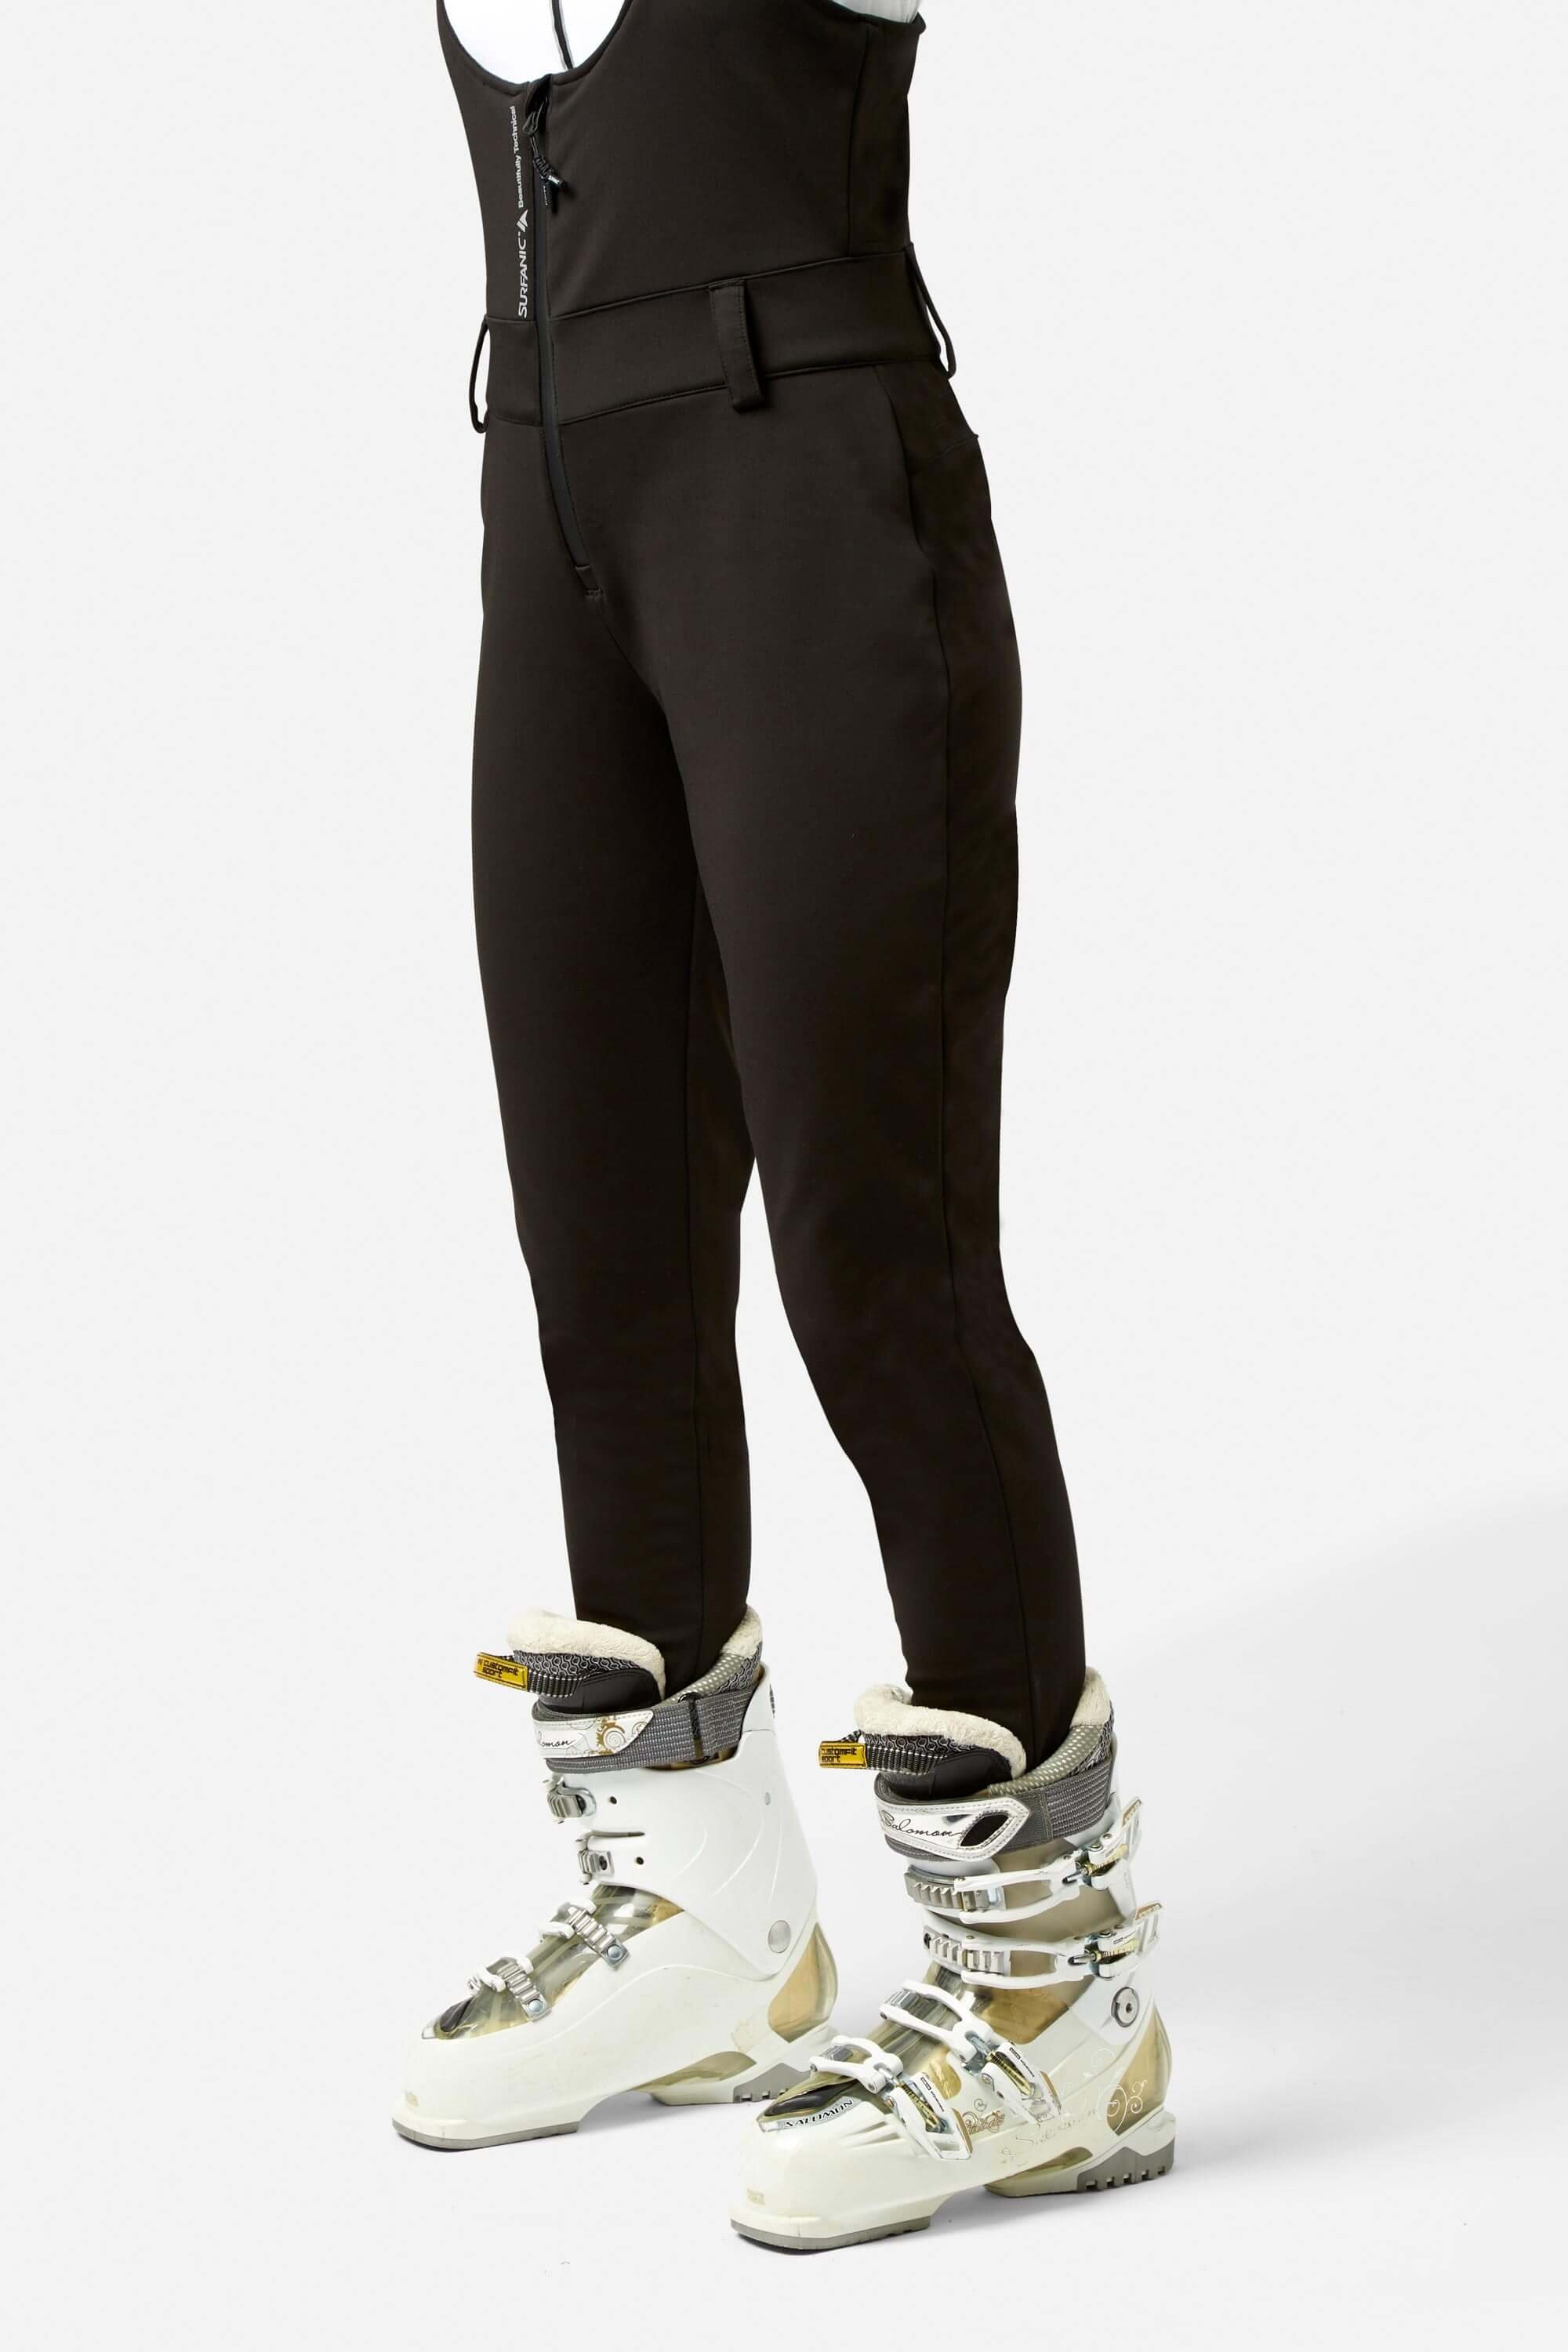 TONI SAILER William Slim-Fit Ski Pants | Yorkdale Mall